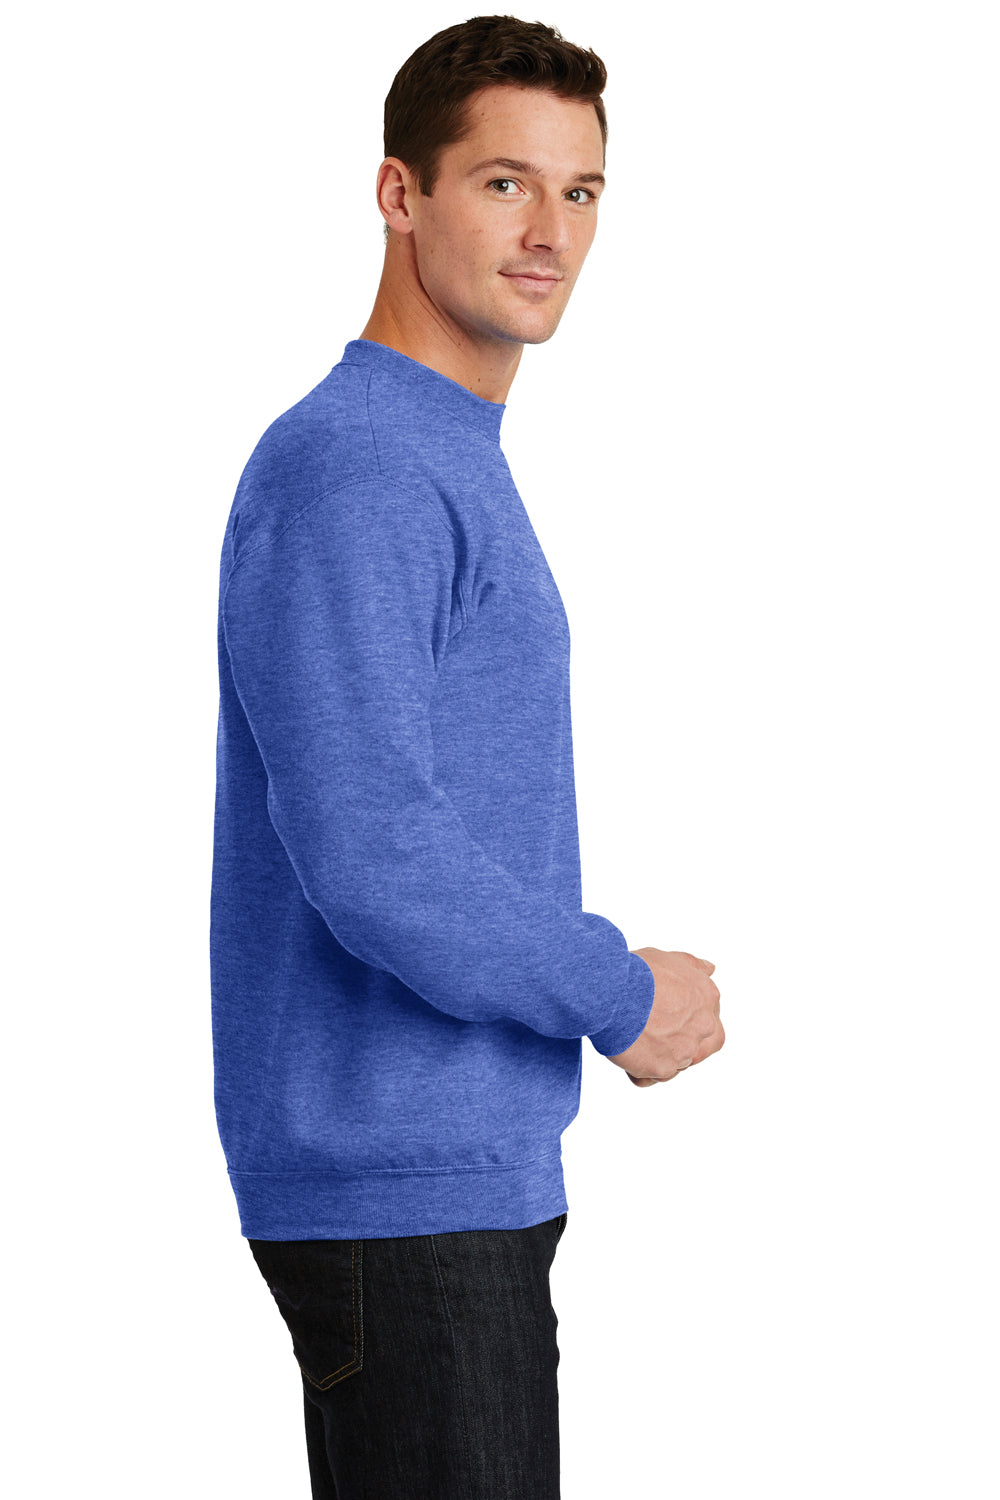 Port & Company PC78 Mens Core Fleece Crewneck Sweatshirt Heather Royal Blue Side